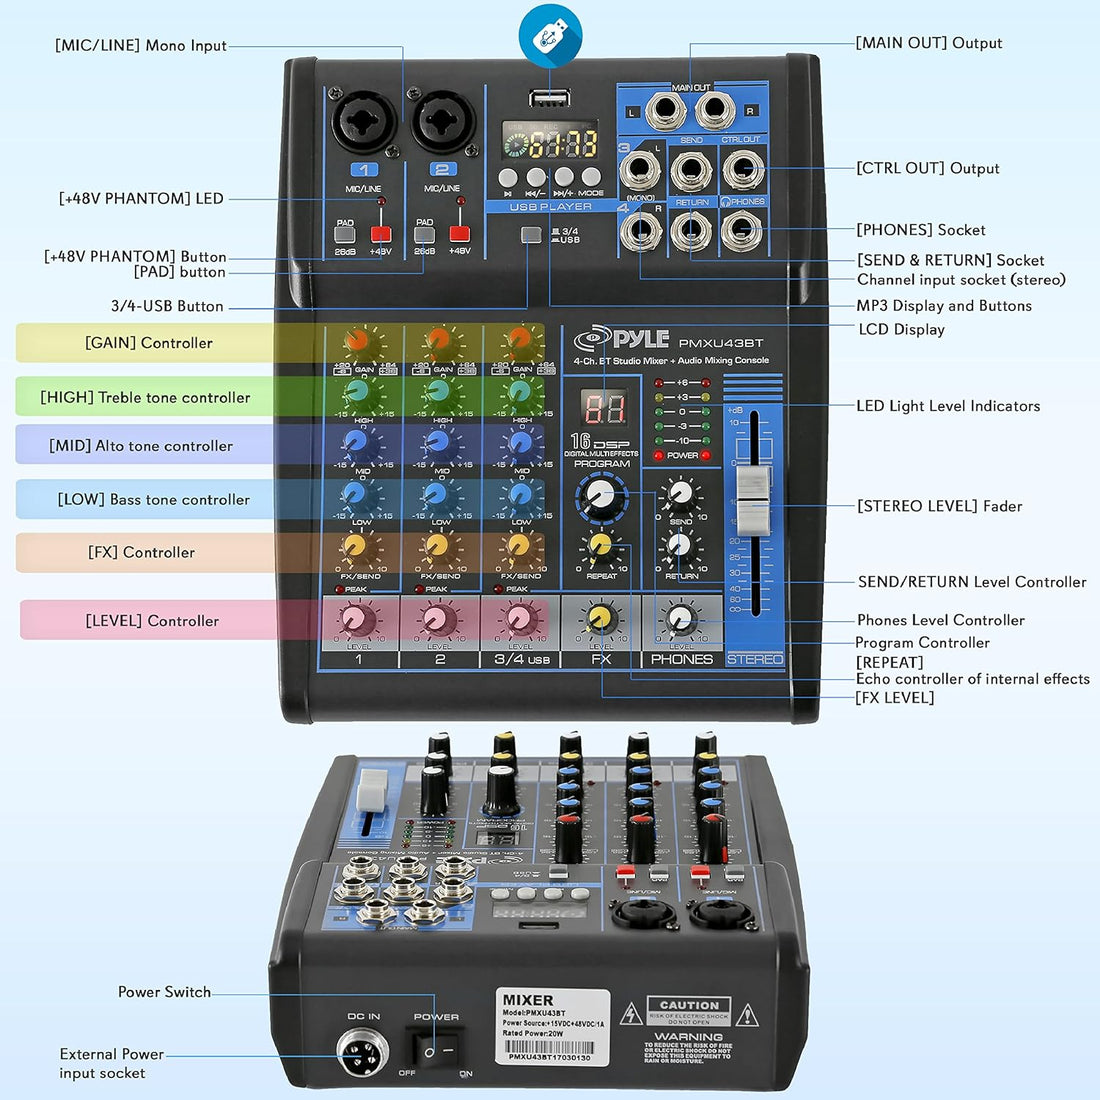 Pyle Professional Audio Mixer Sound Board Console System Interface 4 Channel Digital USB Bluetooth MP3 Computer Input 48V Phantom Power Stereo DJ Studio Streaming FX 16-Bit DSP processor